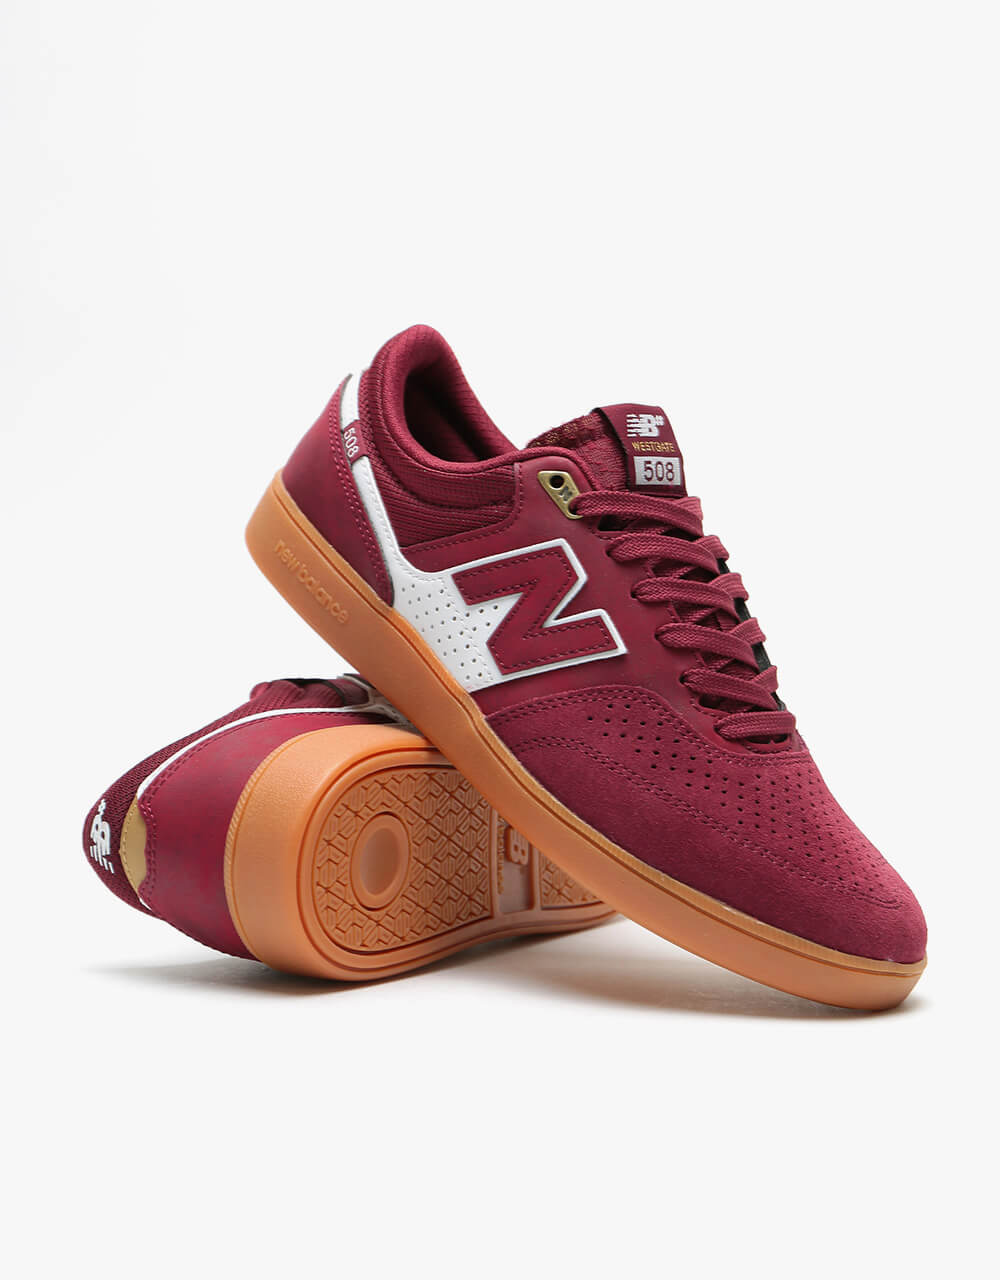 New Balance Numeric 508 Skate Shoes - Burgundy/Gum